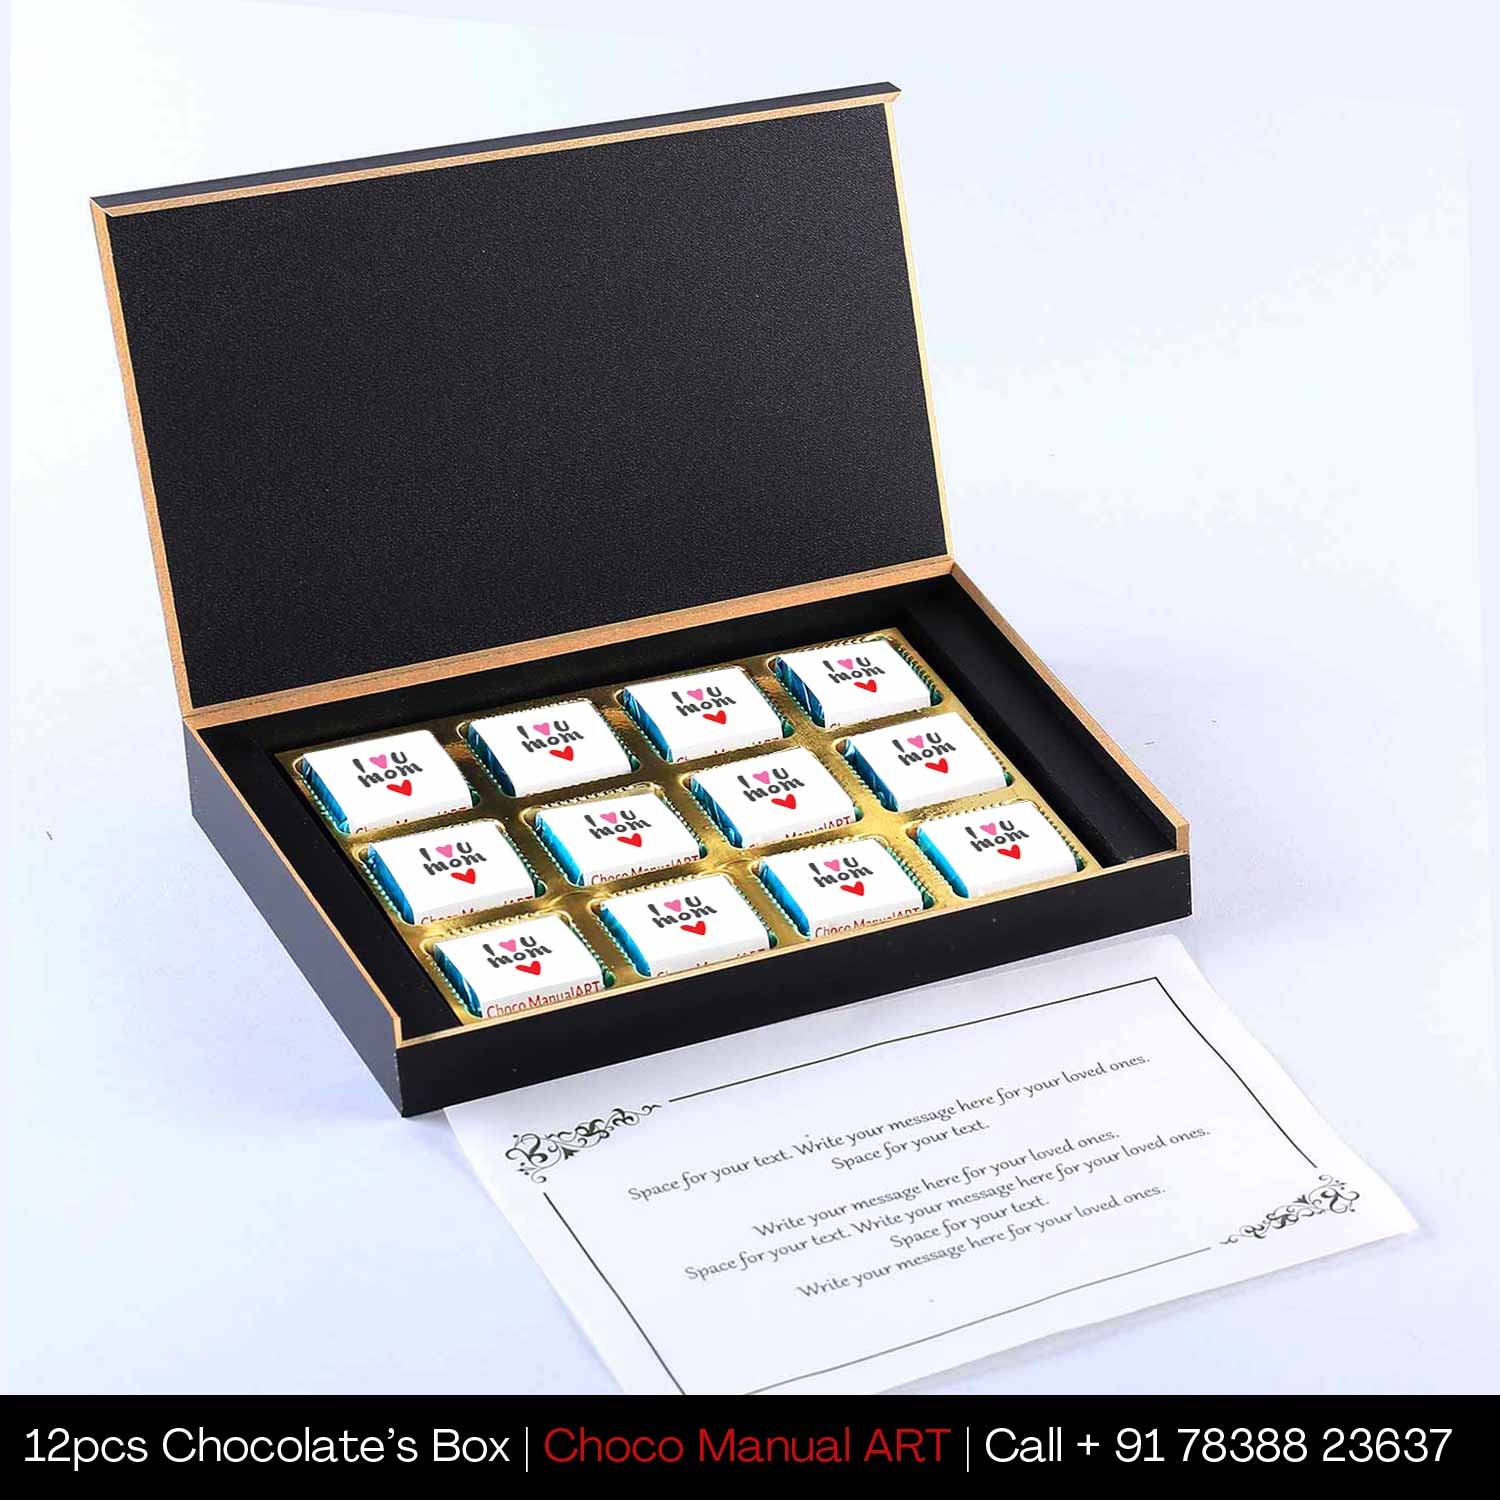 Floral Design Chocolates Printed on Box